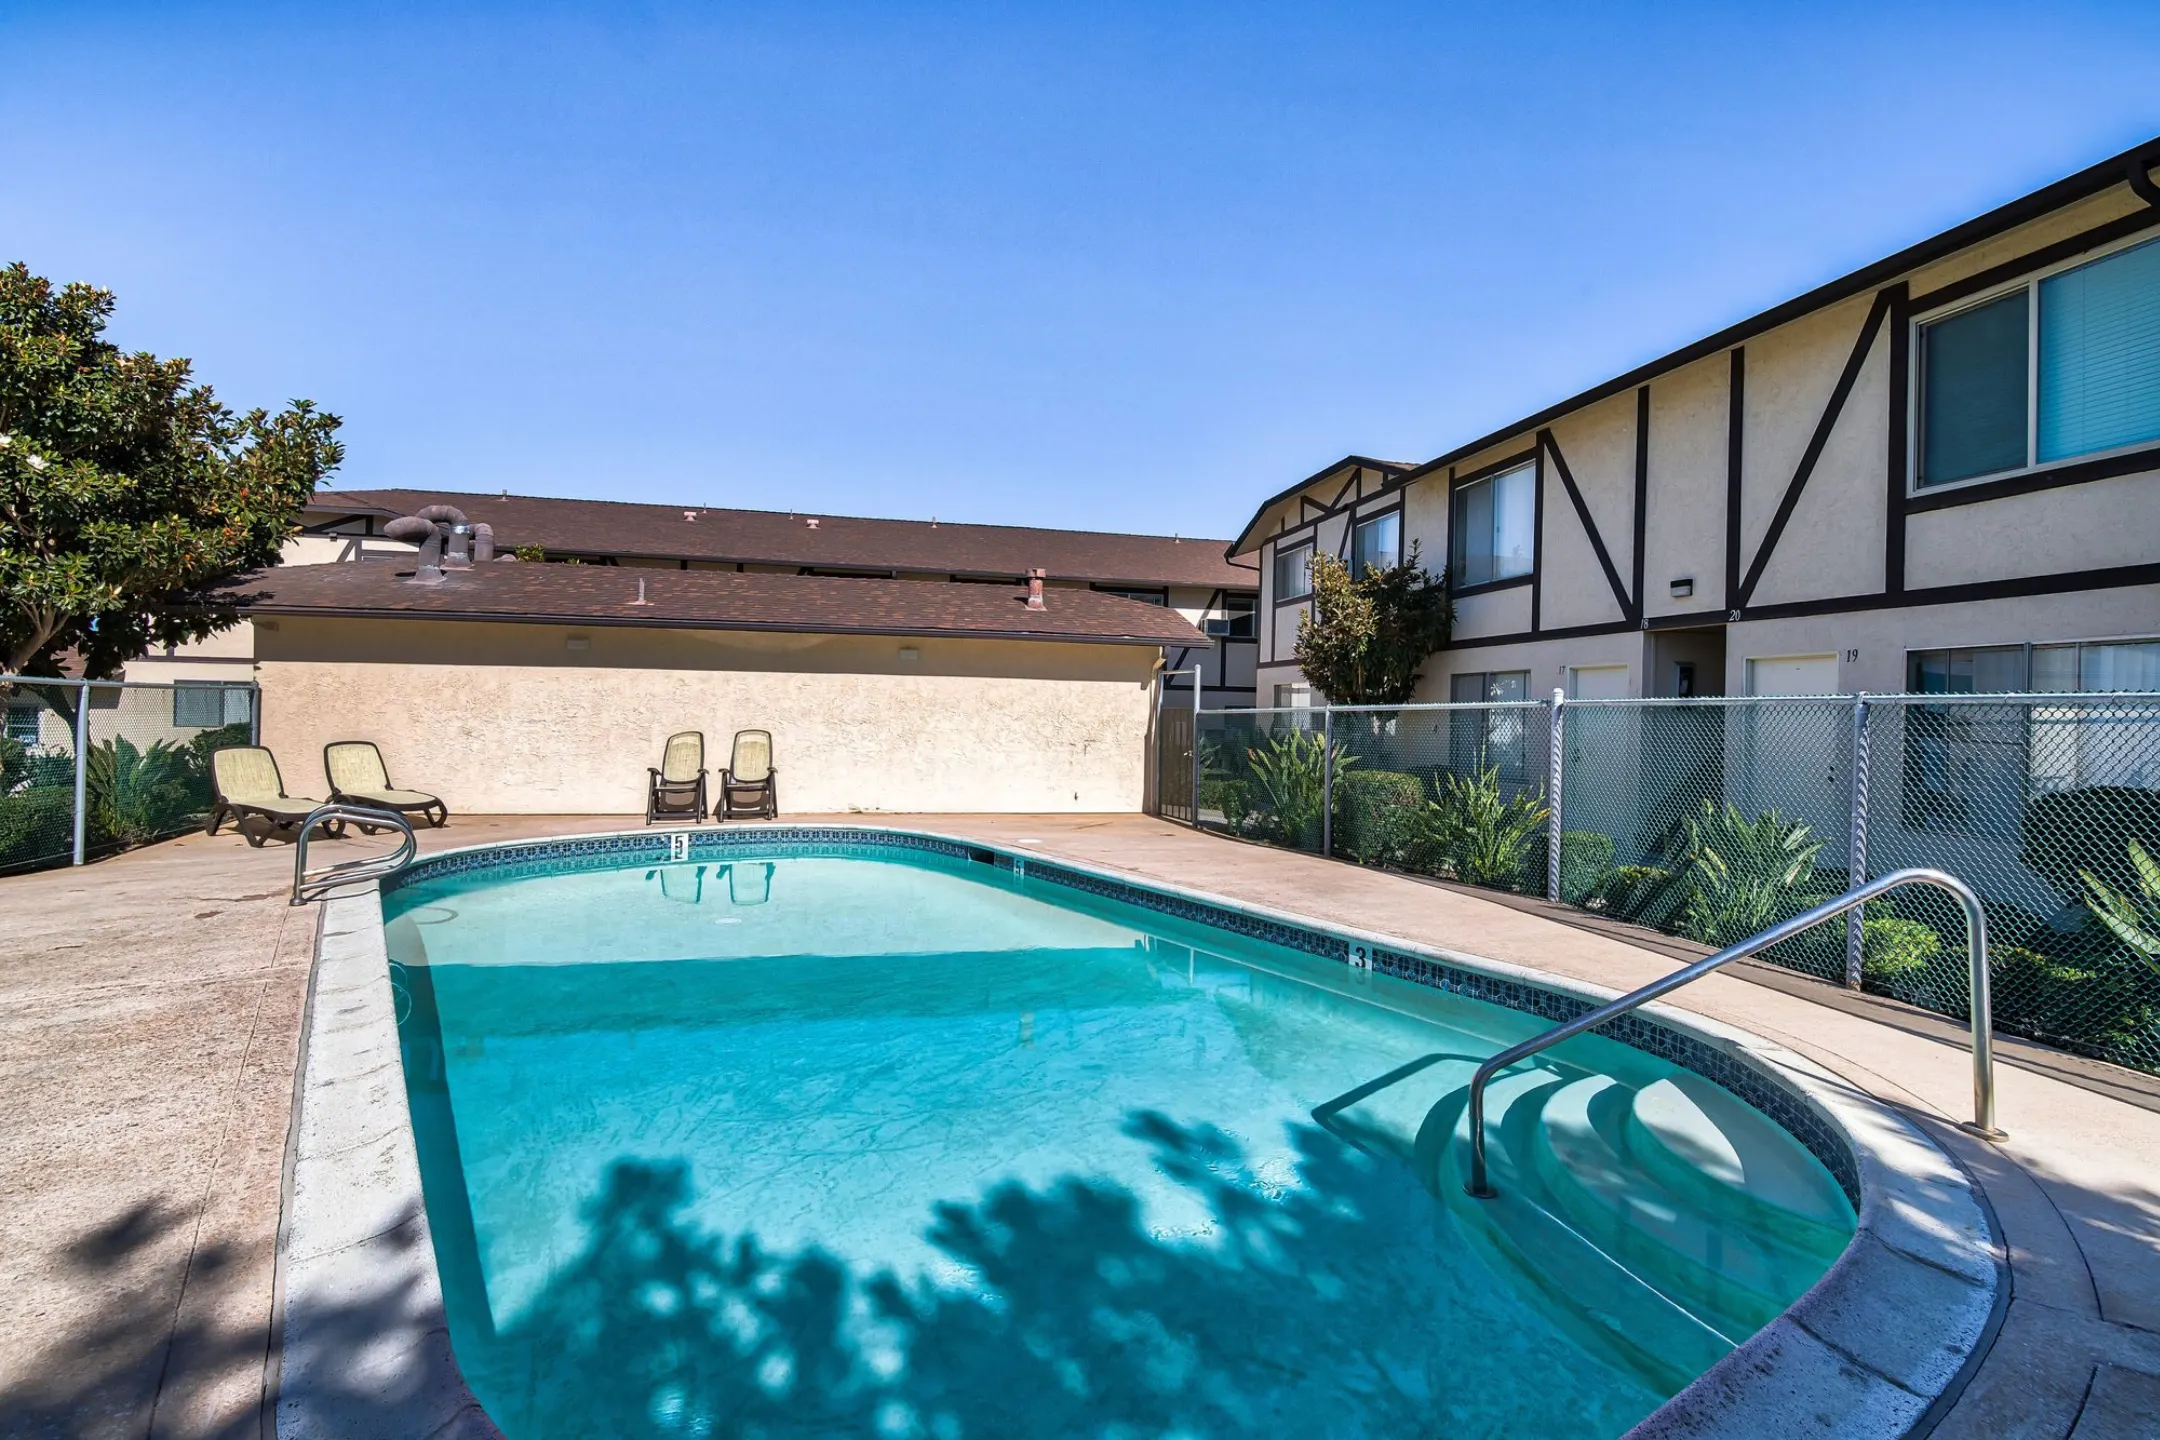 Pool - Villa Bonita - San Diego, CA